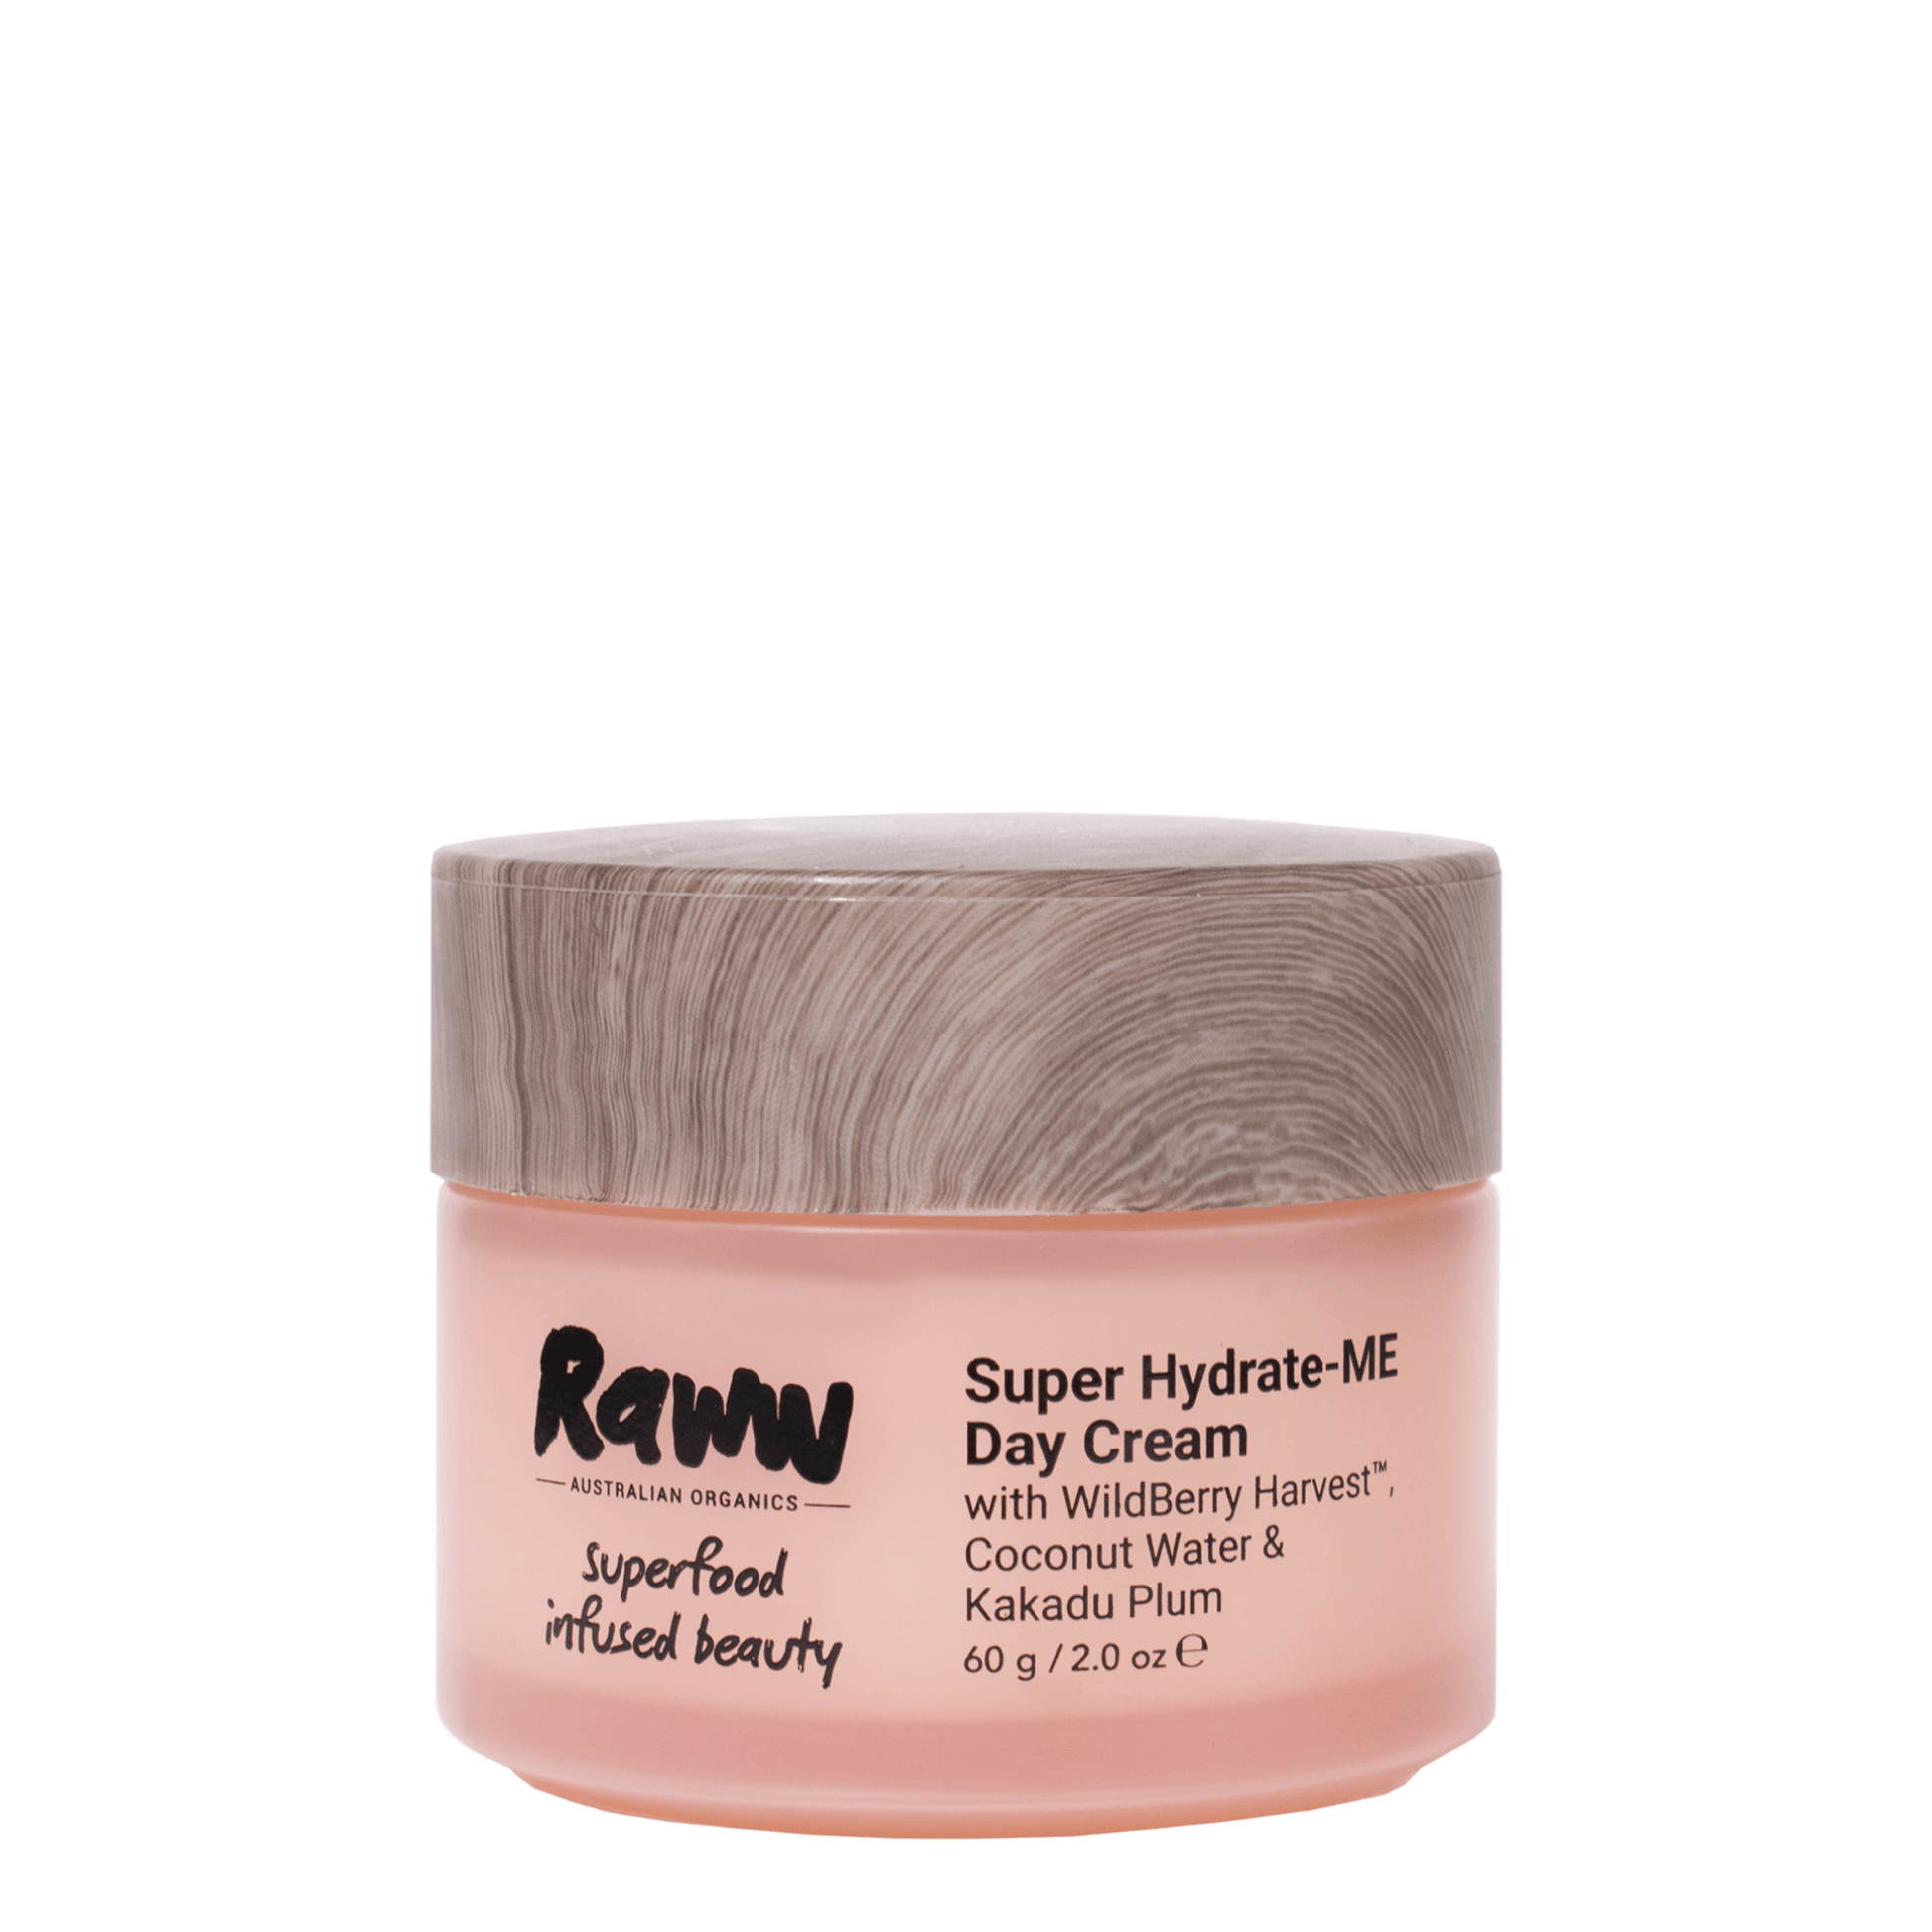 Super Hydrate-ME Day Cream | RAWW Cosmetics | 01